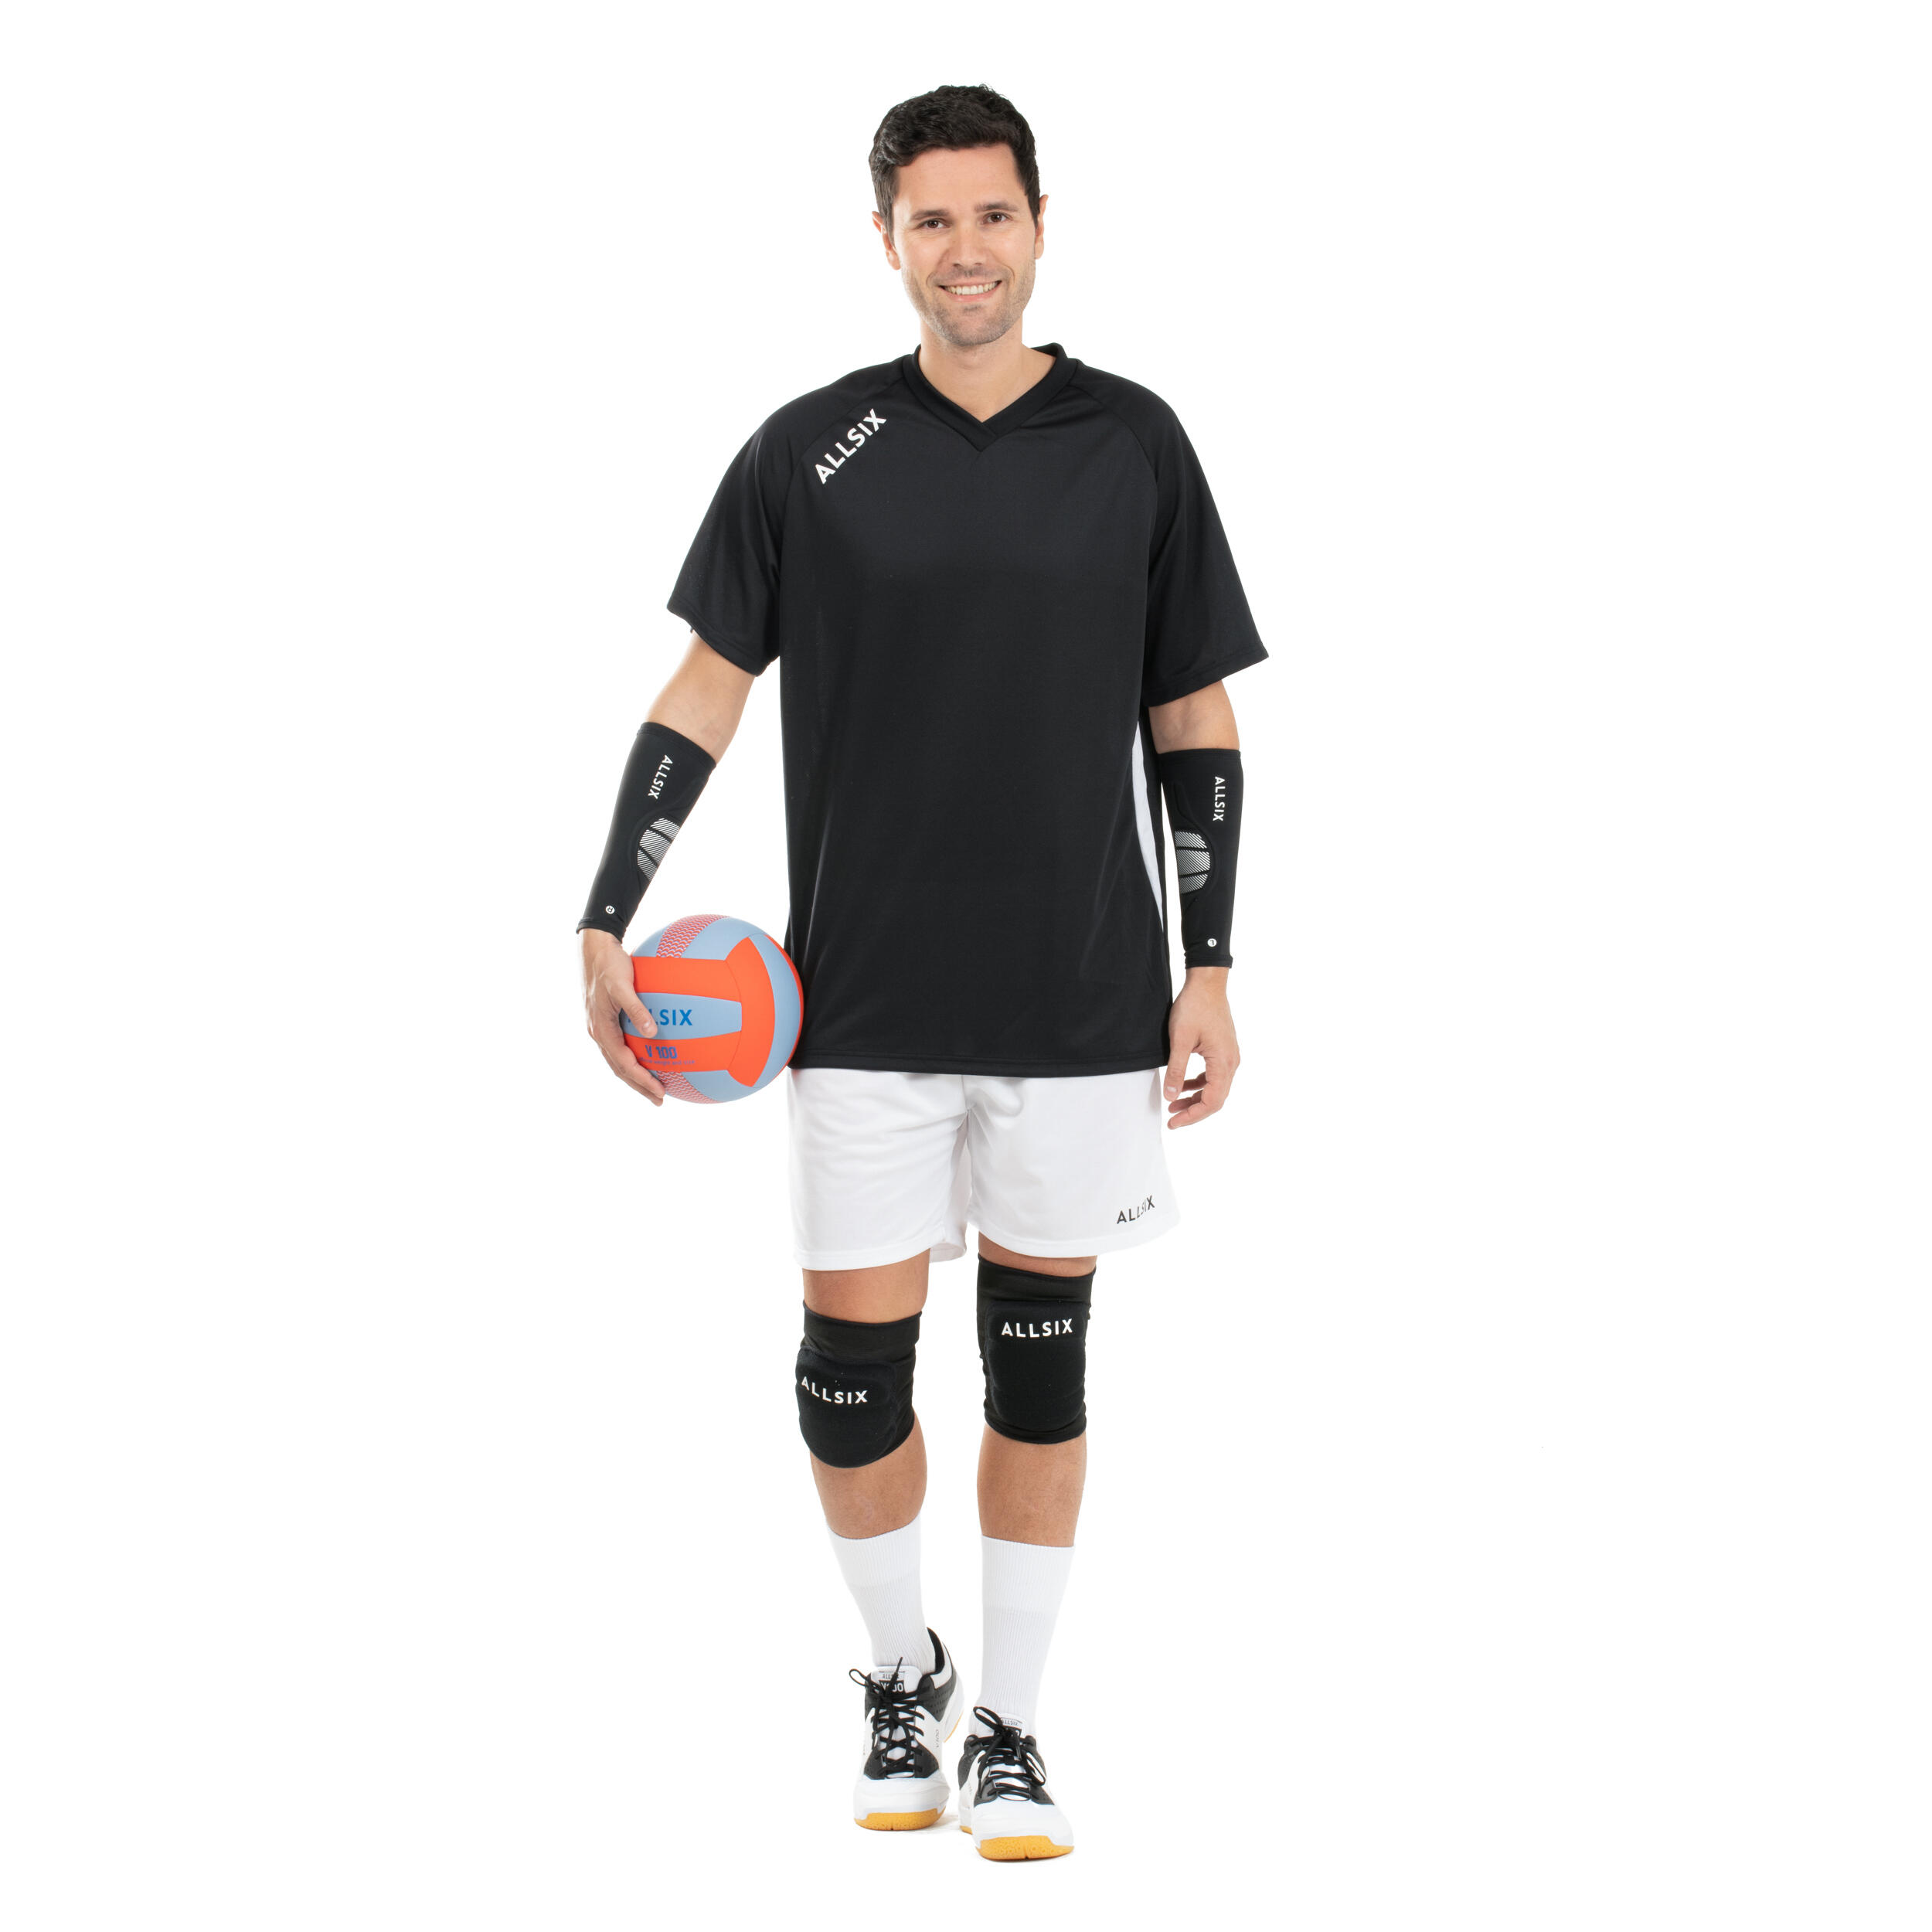 VAP100 Volleyball Sleeves - Black 6/19